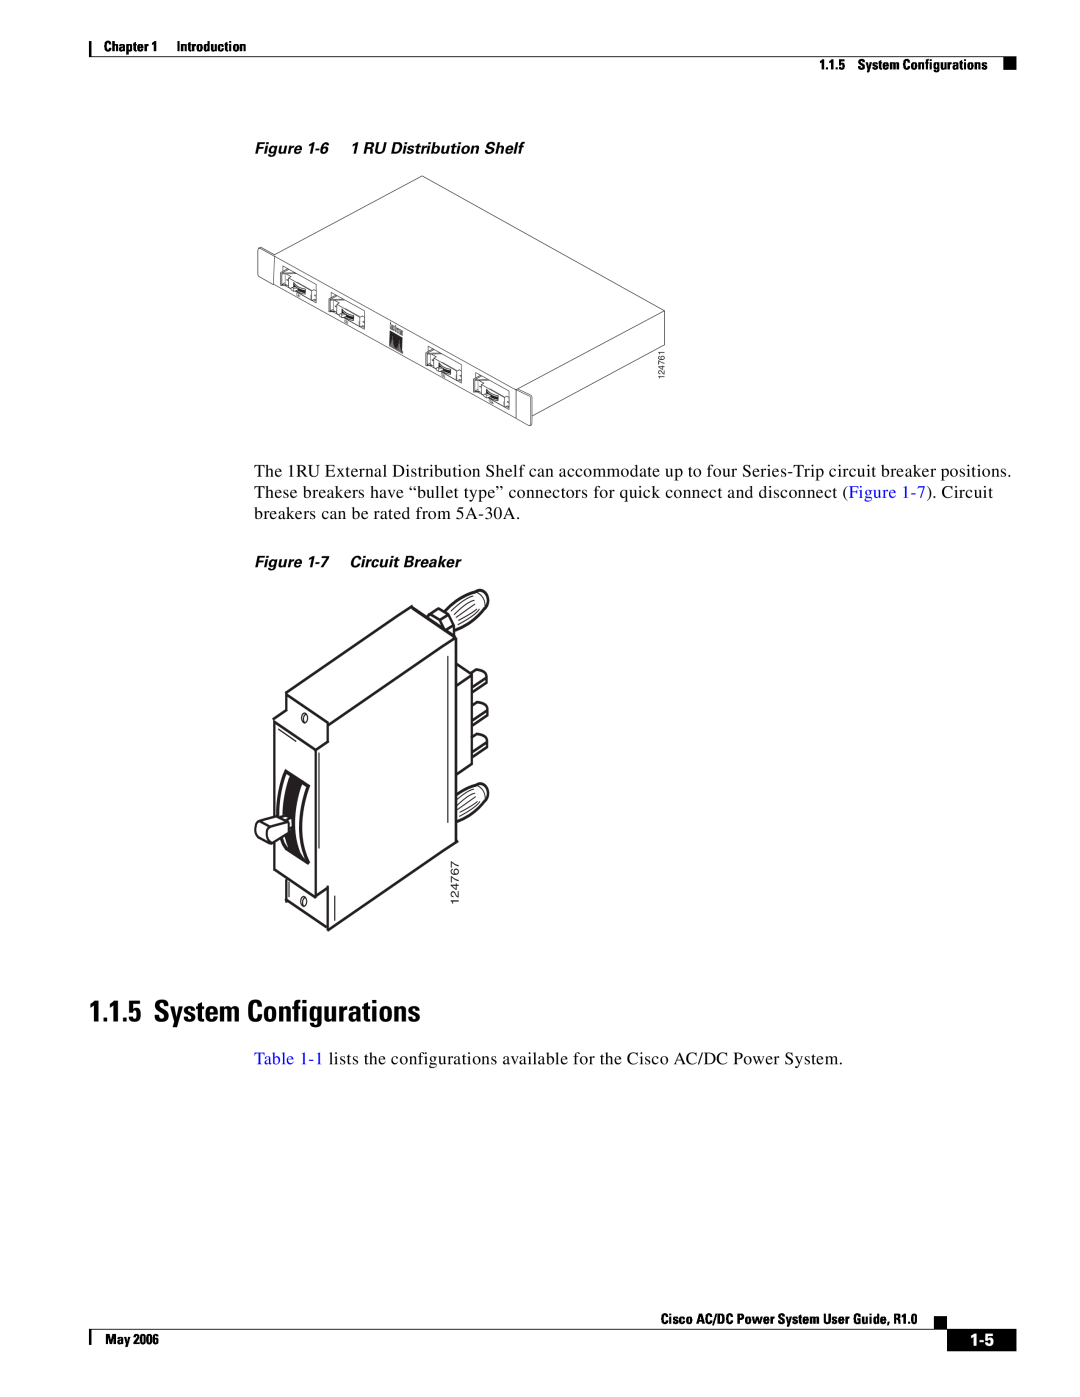 Cisco Systems 124792, 124778, 159330 manual System Configurations, 6 1 RU Distribution Shelf, 7 Circuit Breaker 